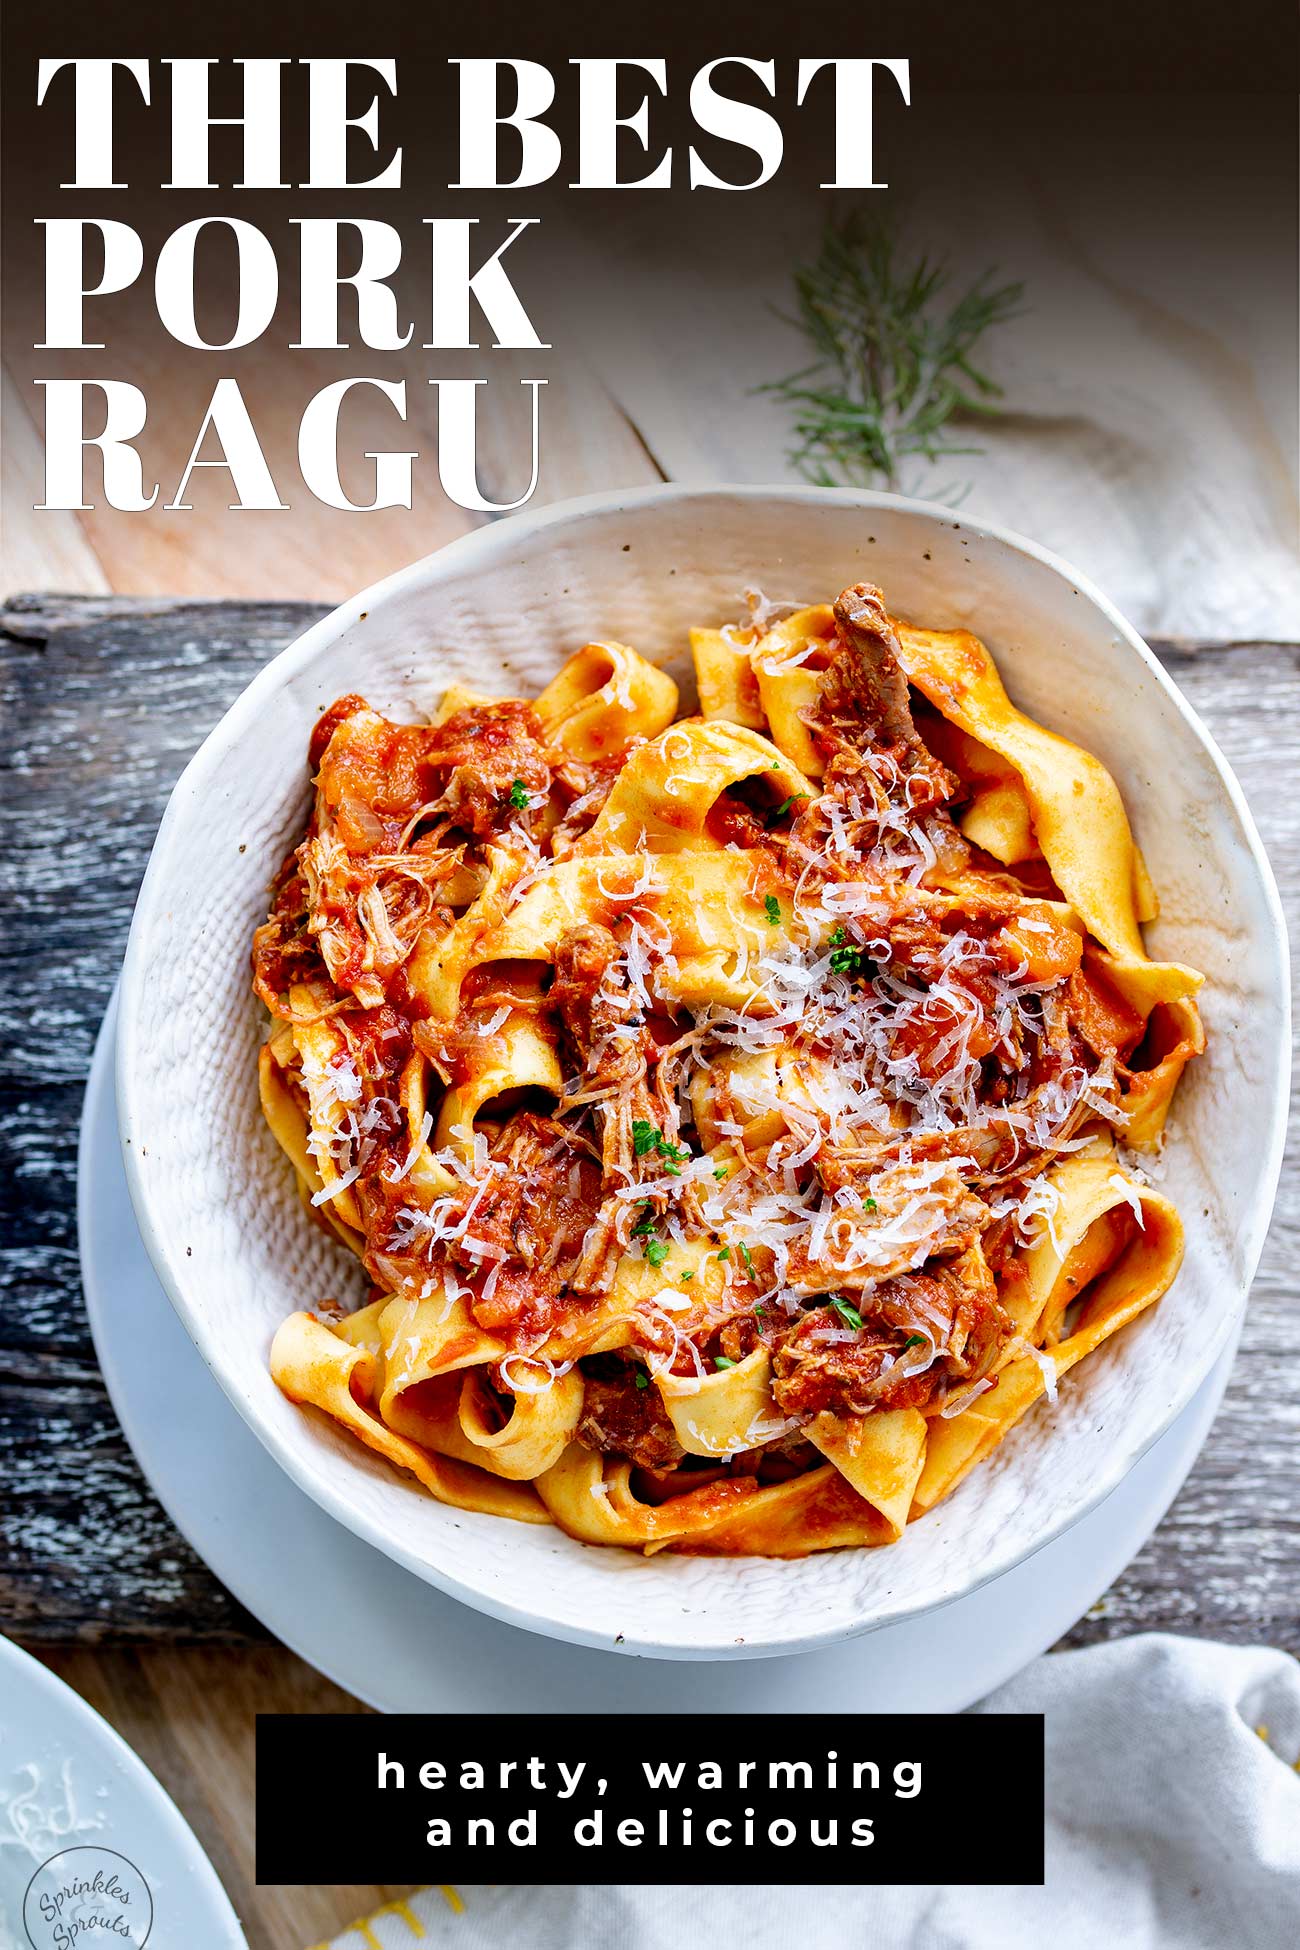 PINTEREST IMAGE: Pork Ragu Pasta with text overlay